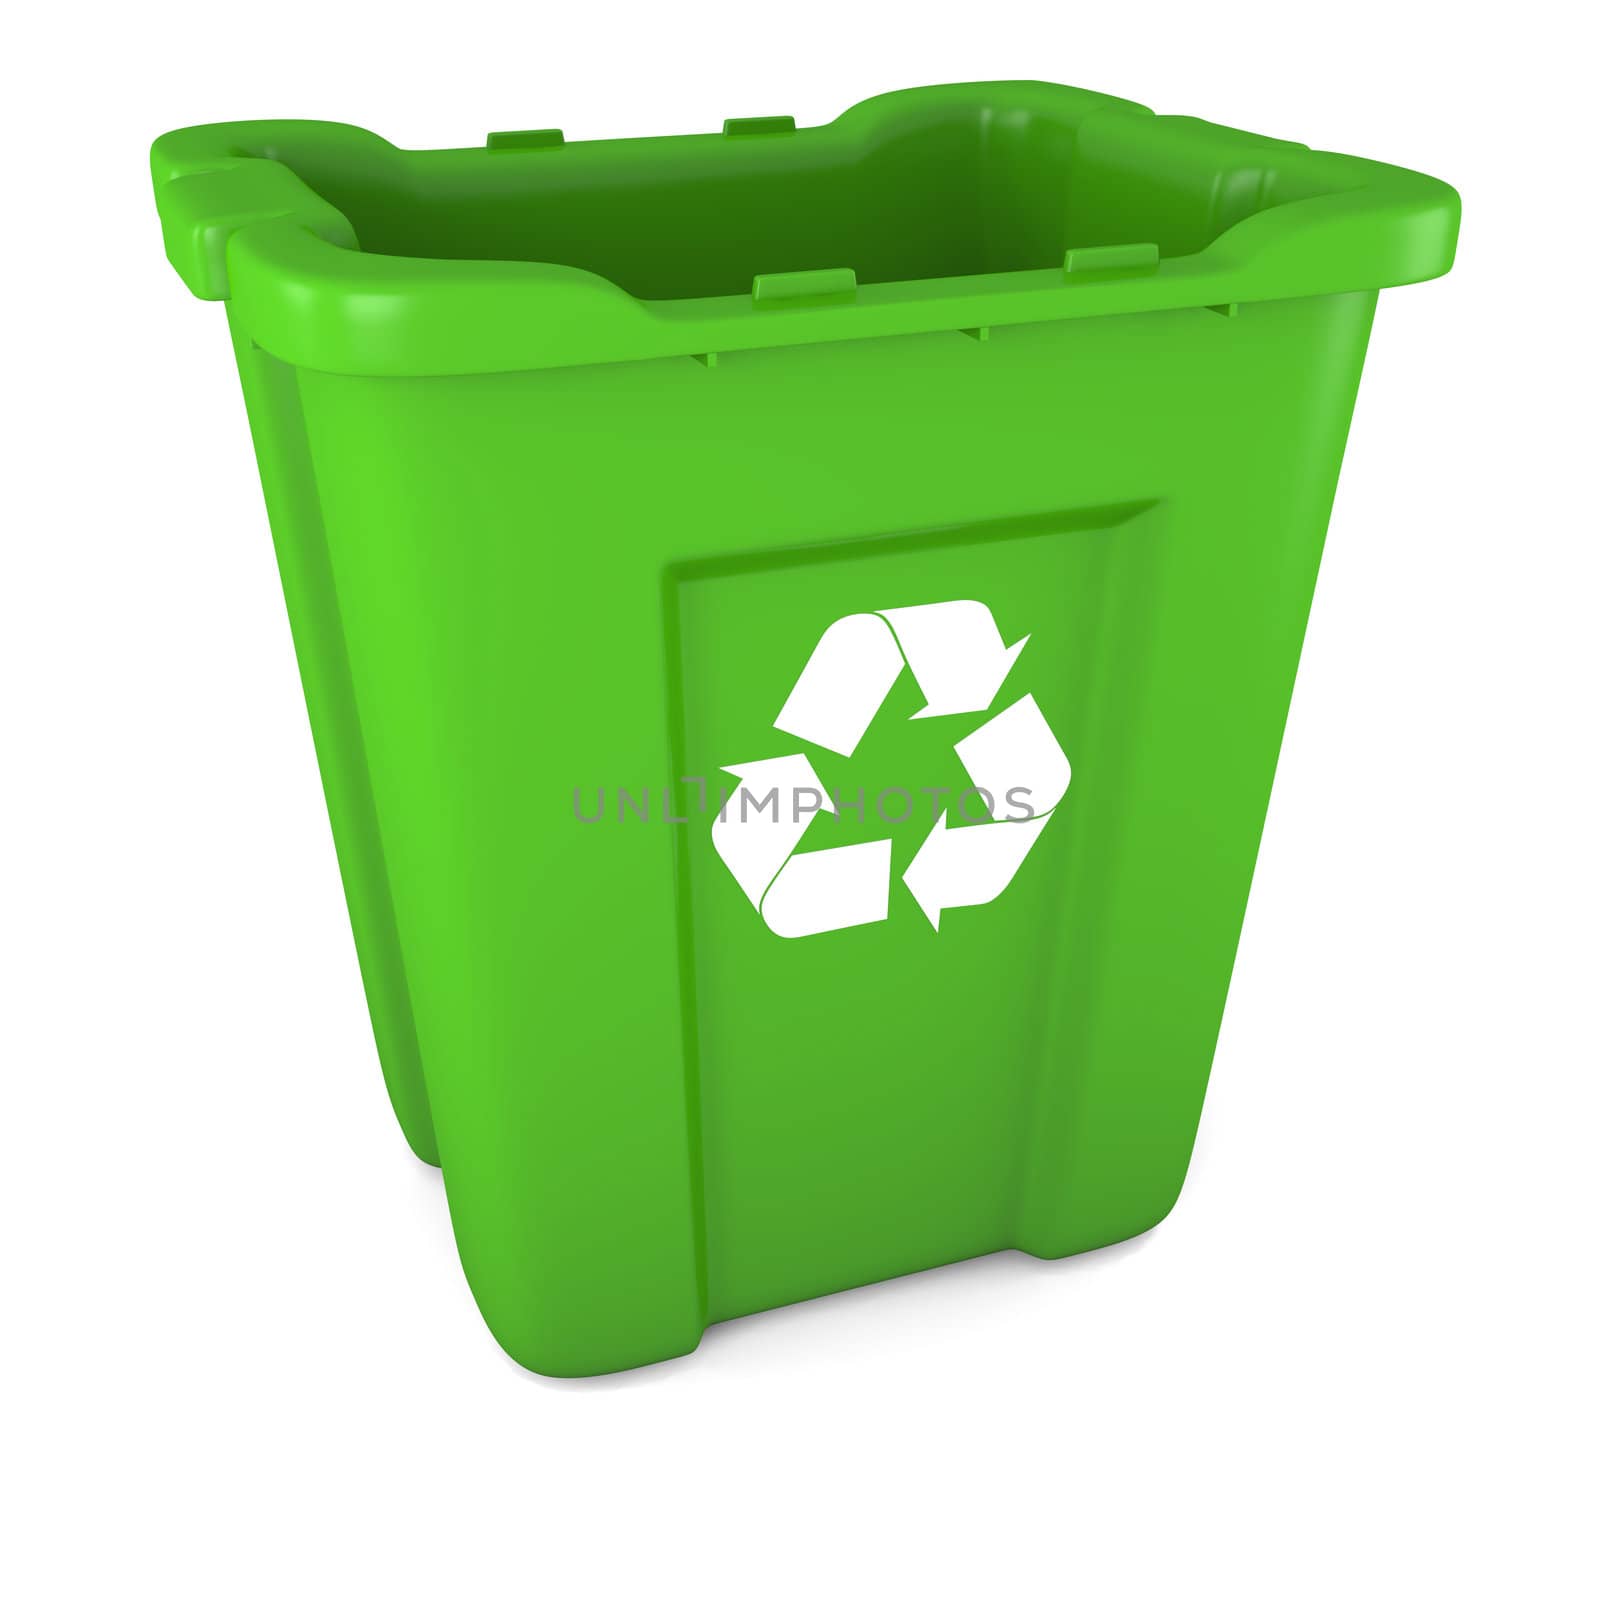 Green plastic recycle bin by Harvepino